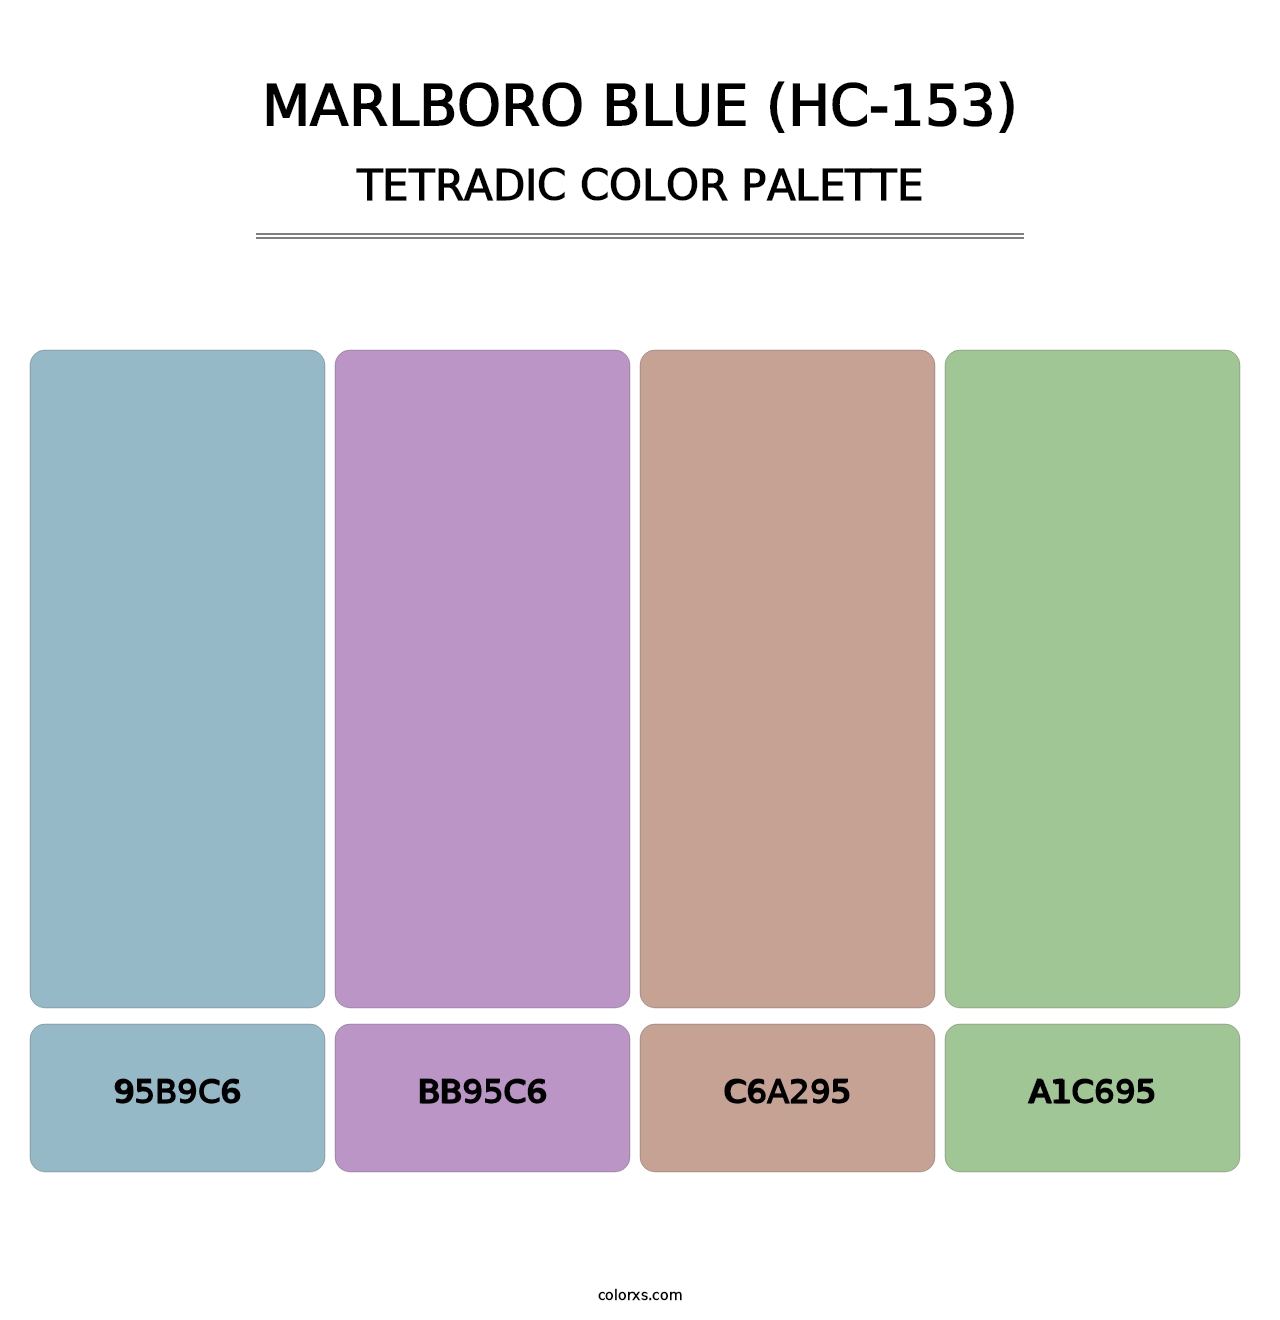 Marlboro Blue (HC-153) - Tetradic Color Palette